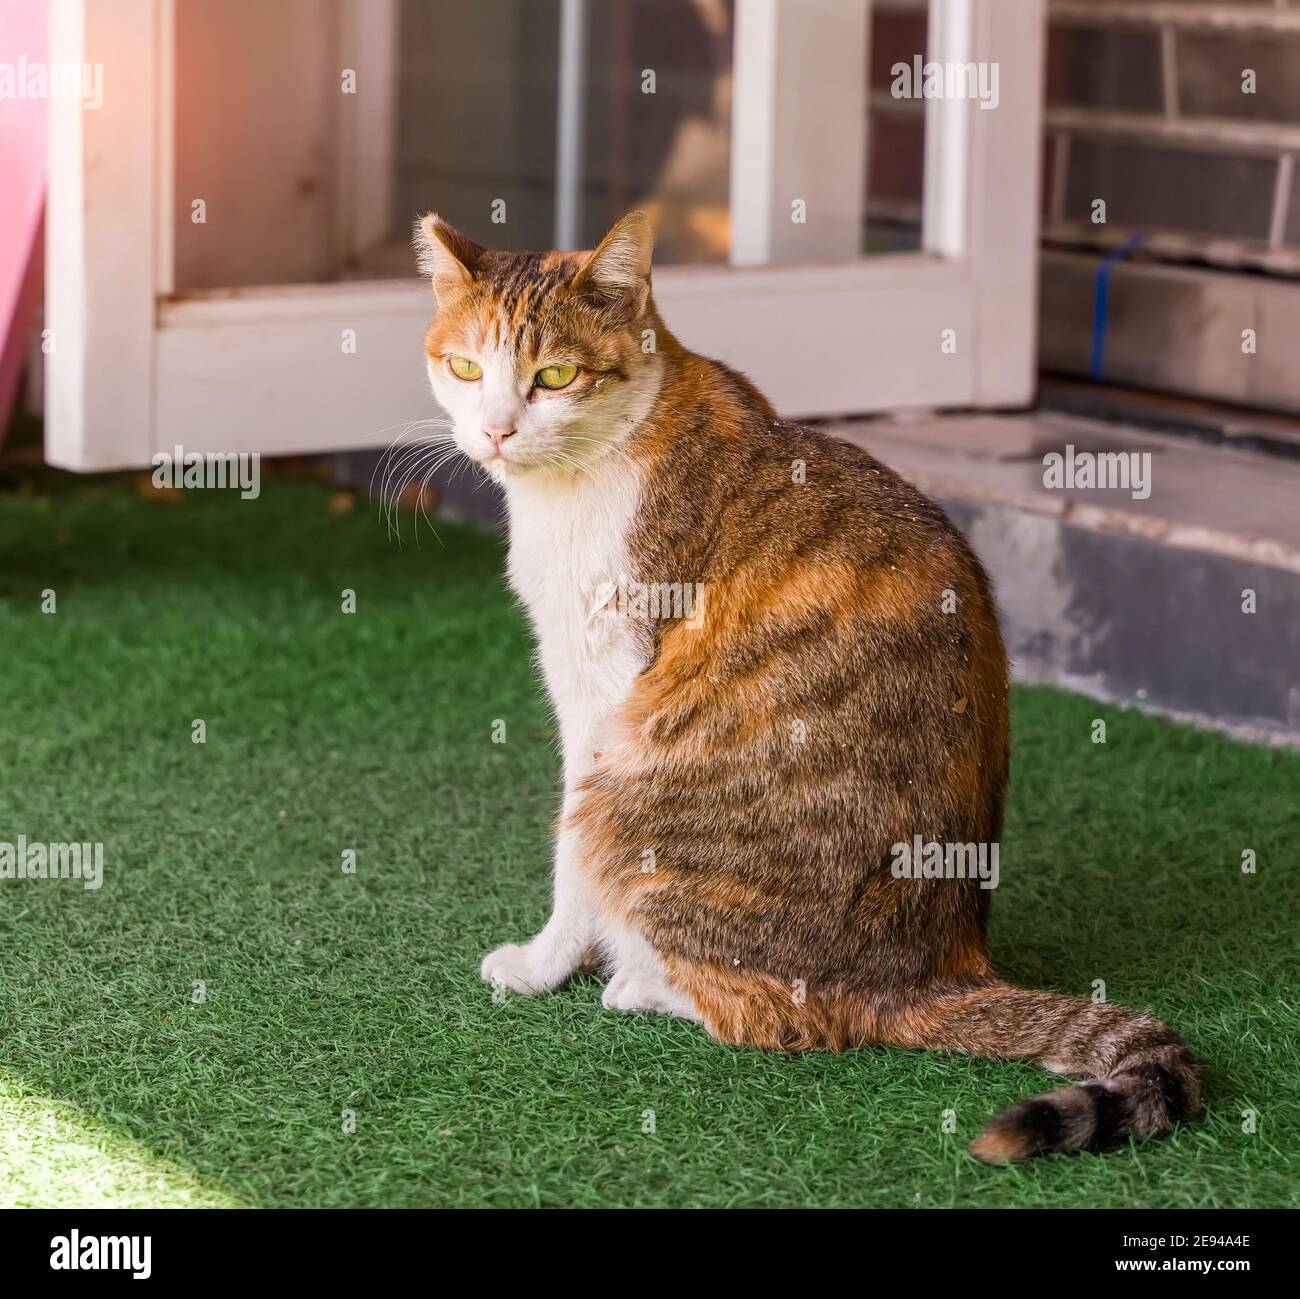 cat playing at home backyard Stock Photo